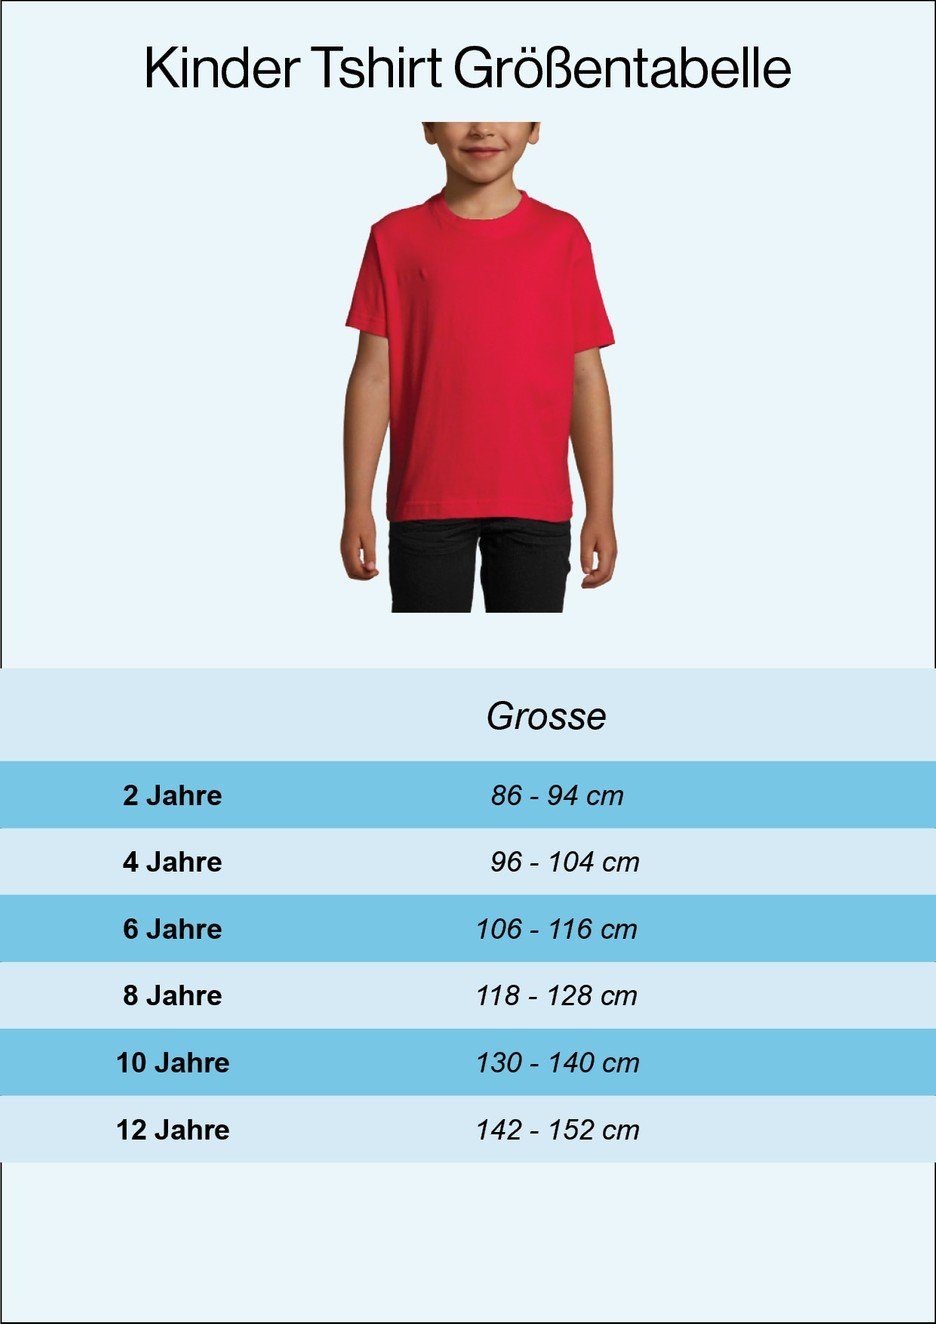 Youth Look Polen T-Shirt Fußball Trikot Designz T-Shirt mit Rot Motiv trendigem im Kinder